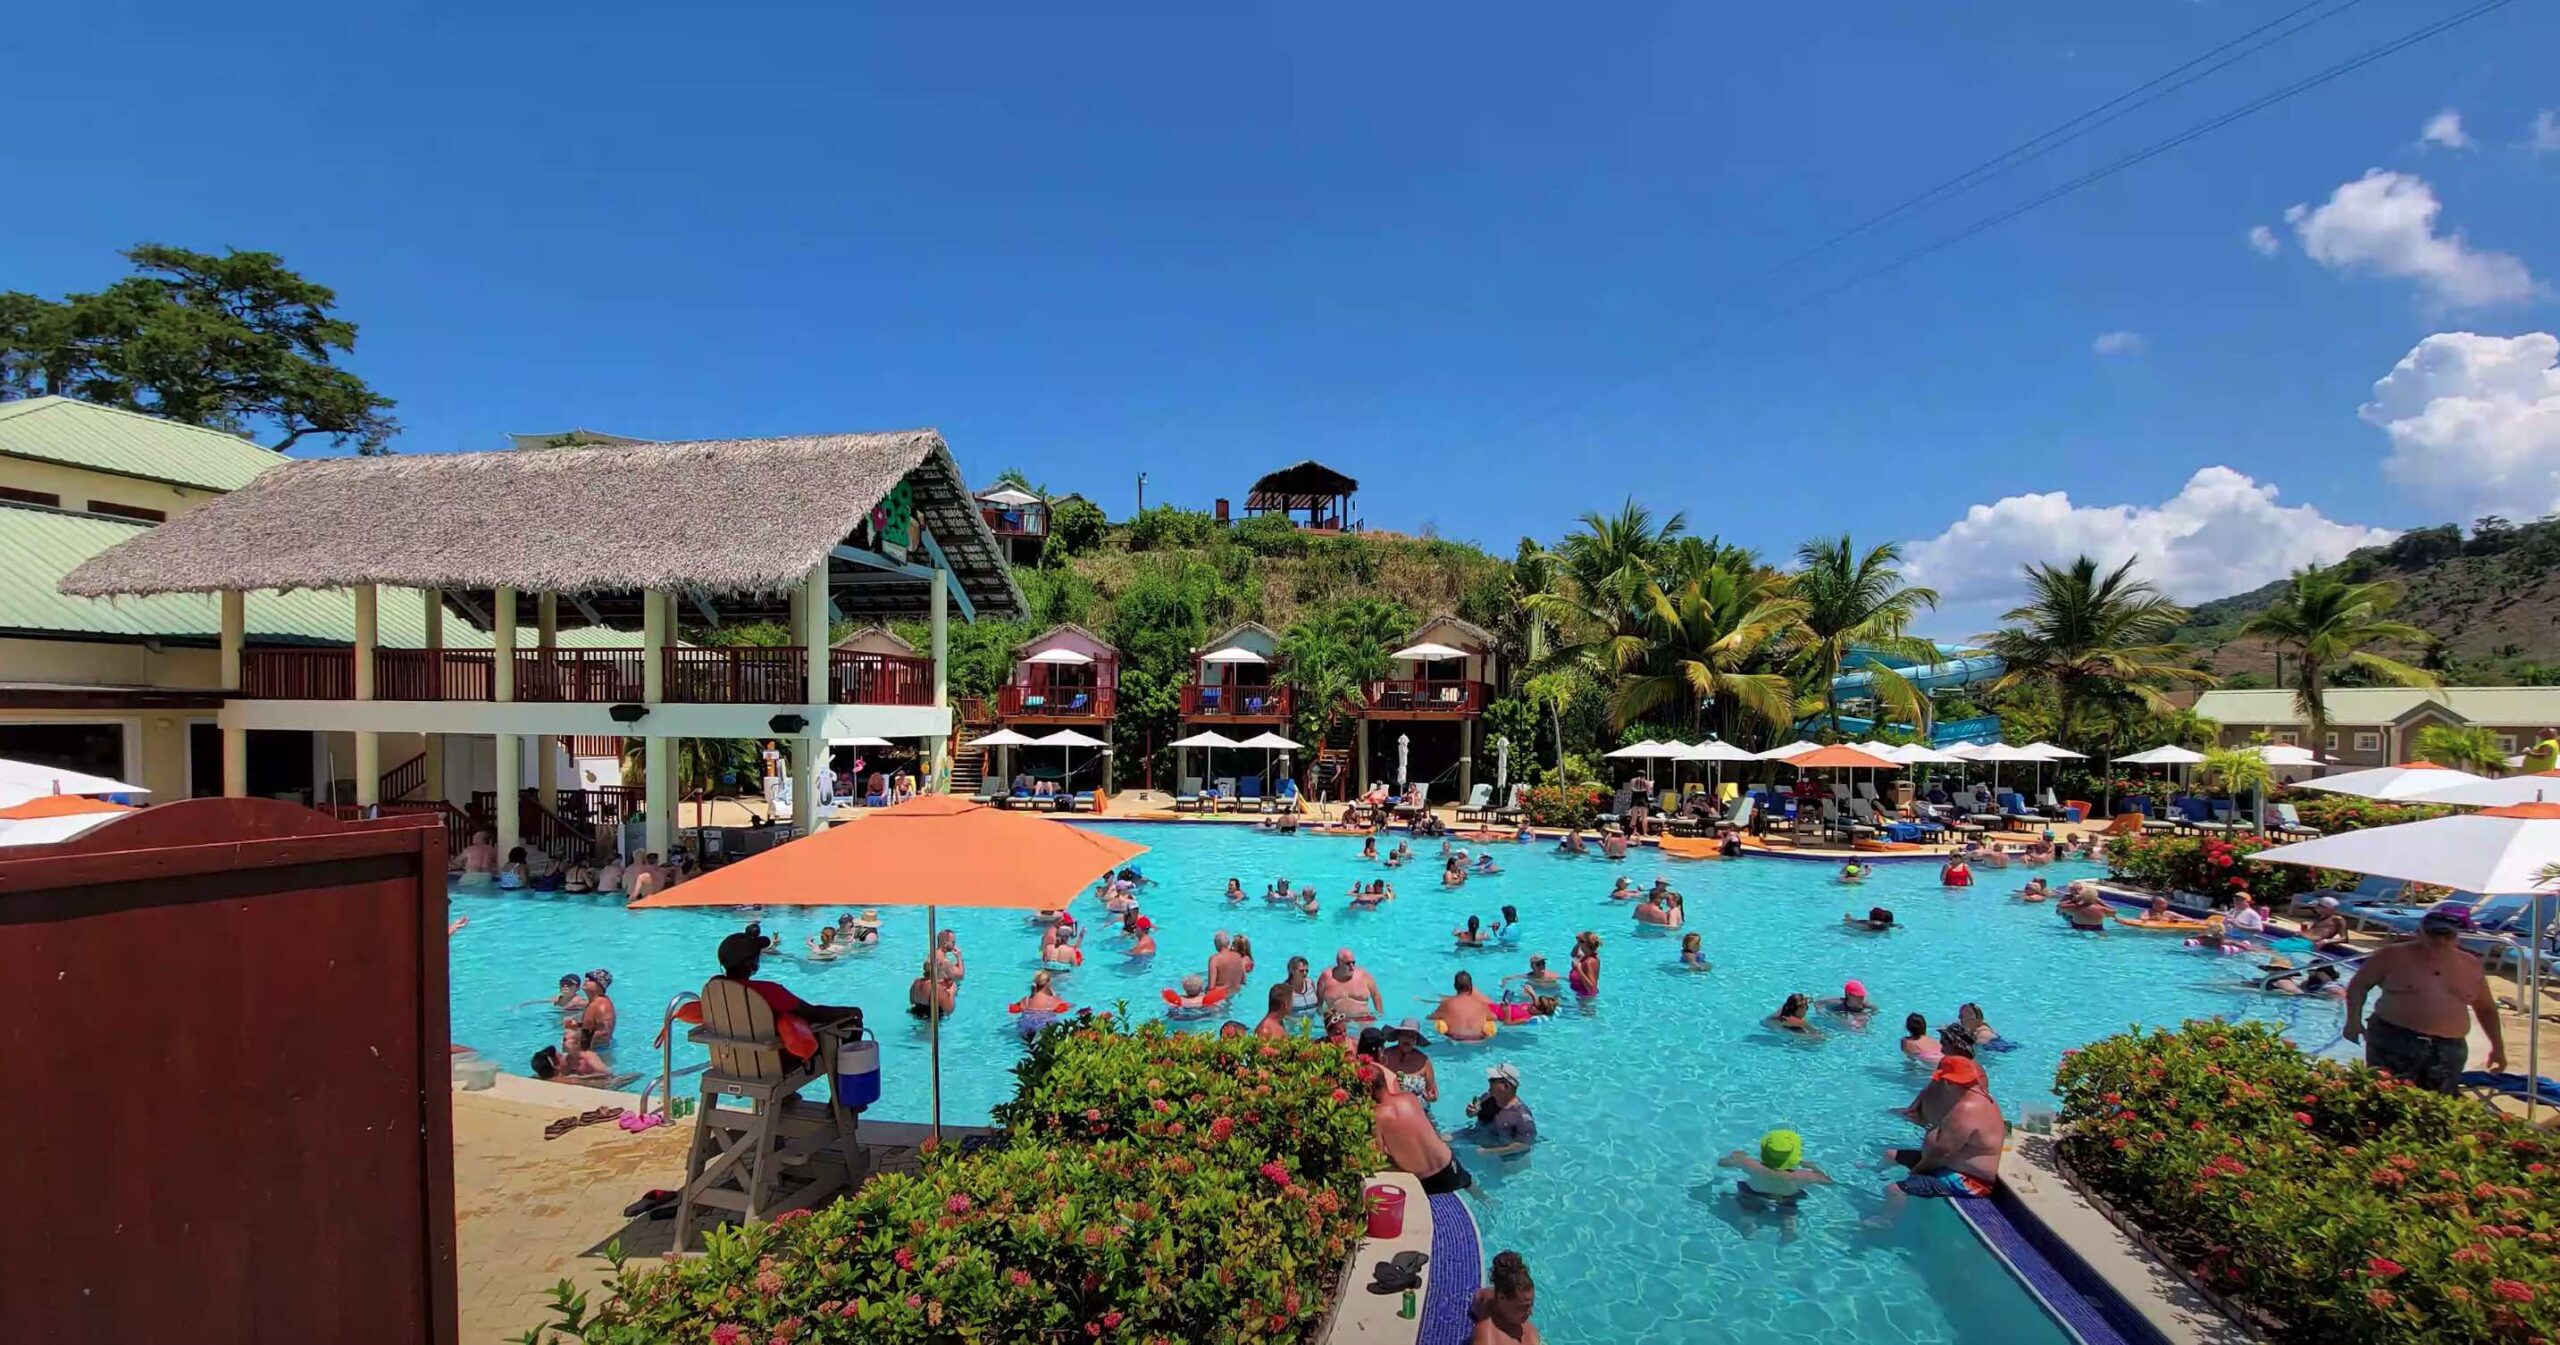 Amber Cove Coco Cana pool lounge